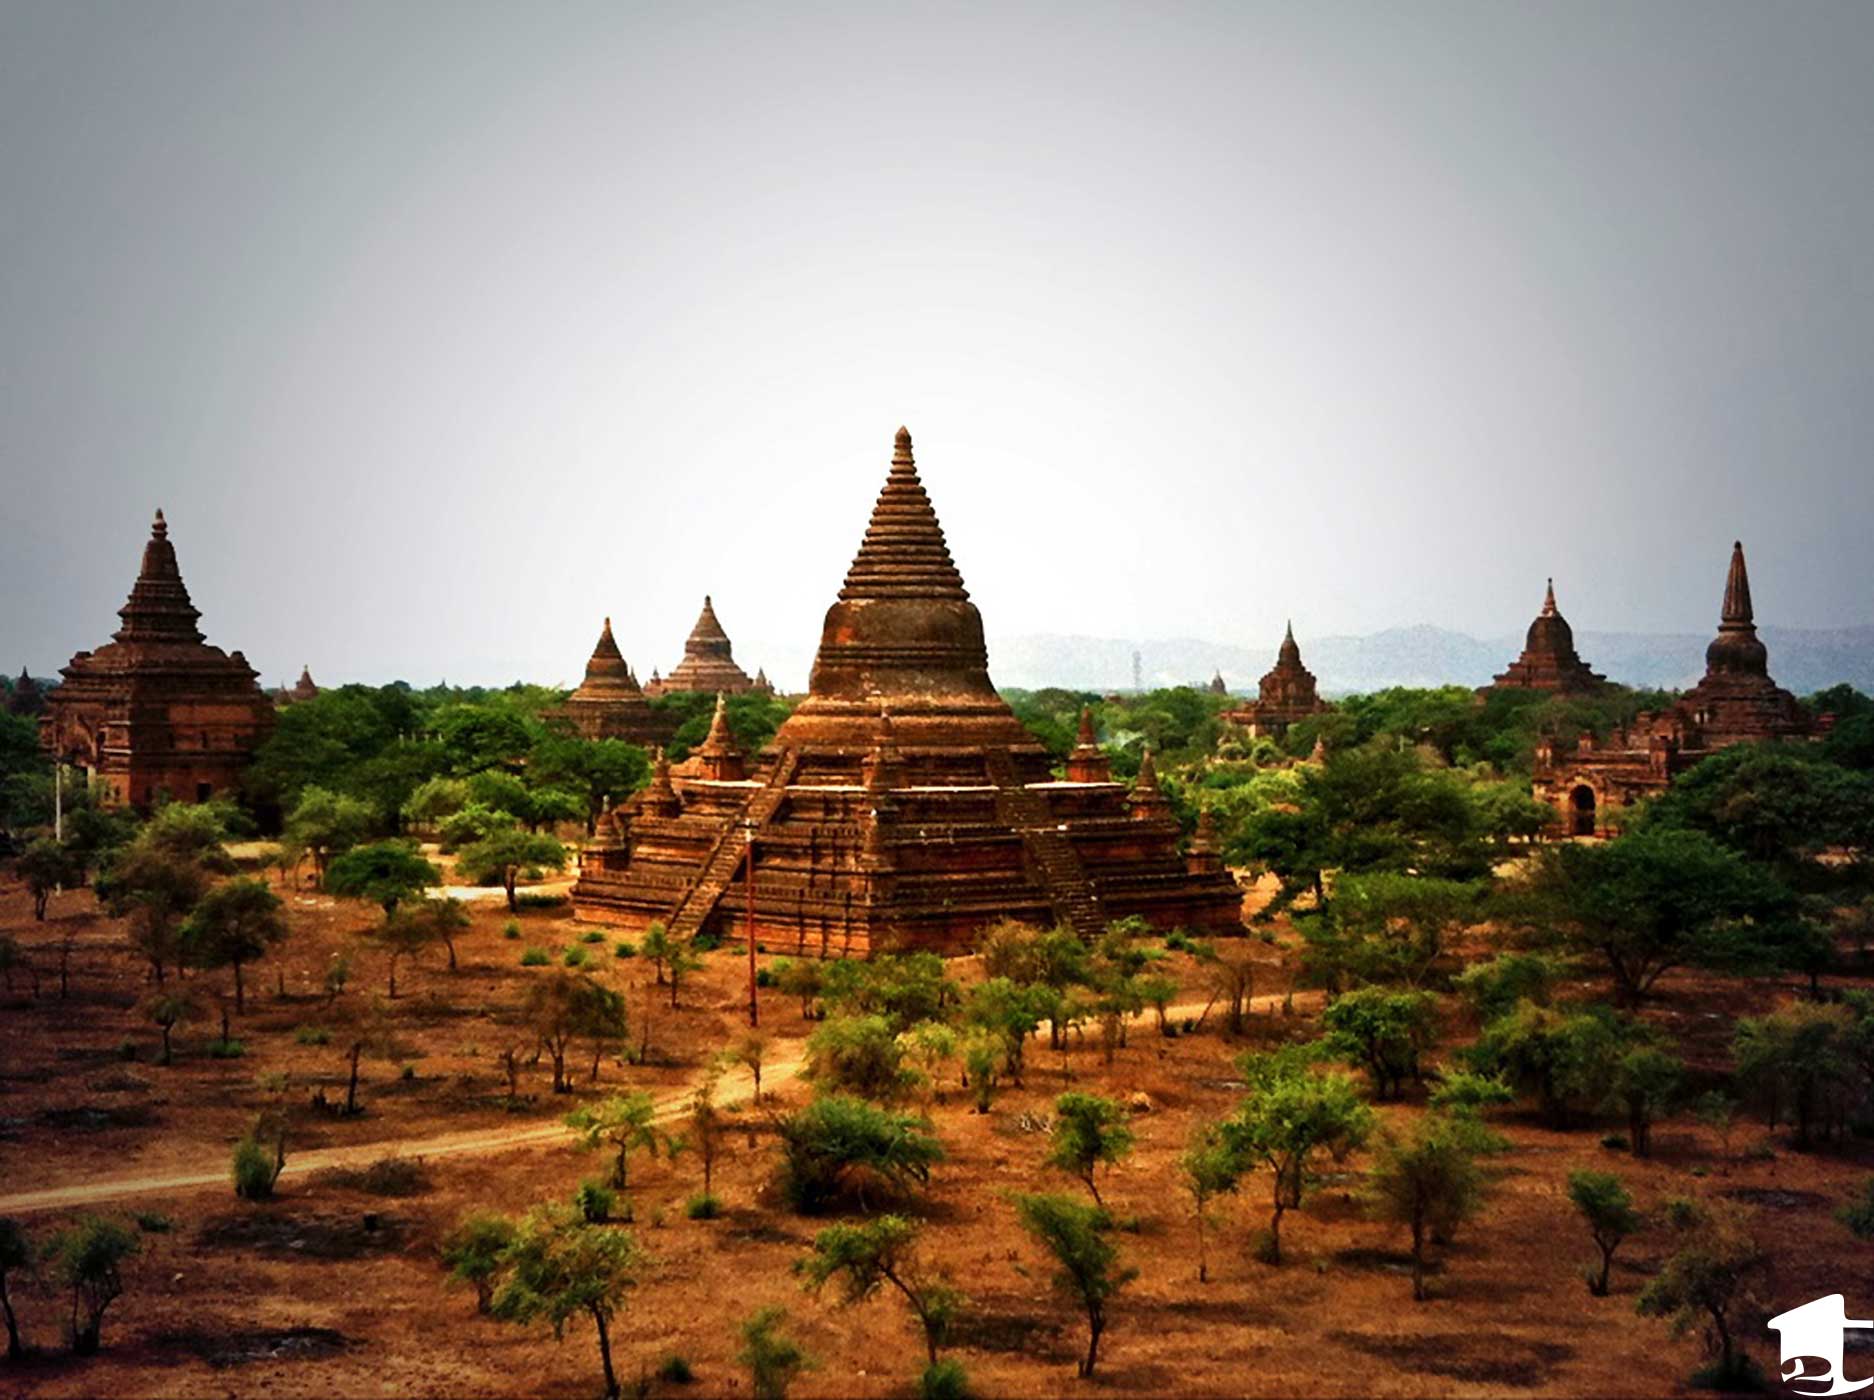 View of Temples in Bagan